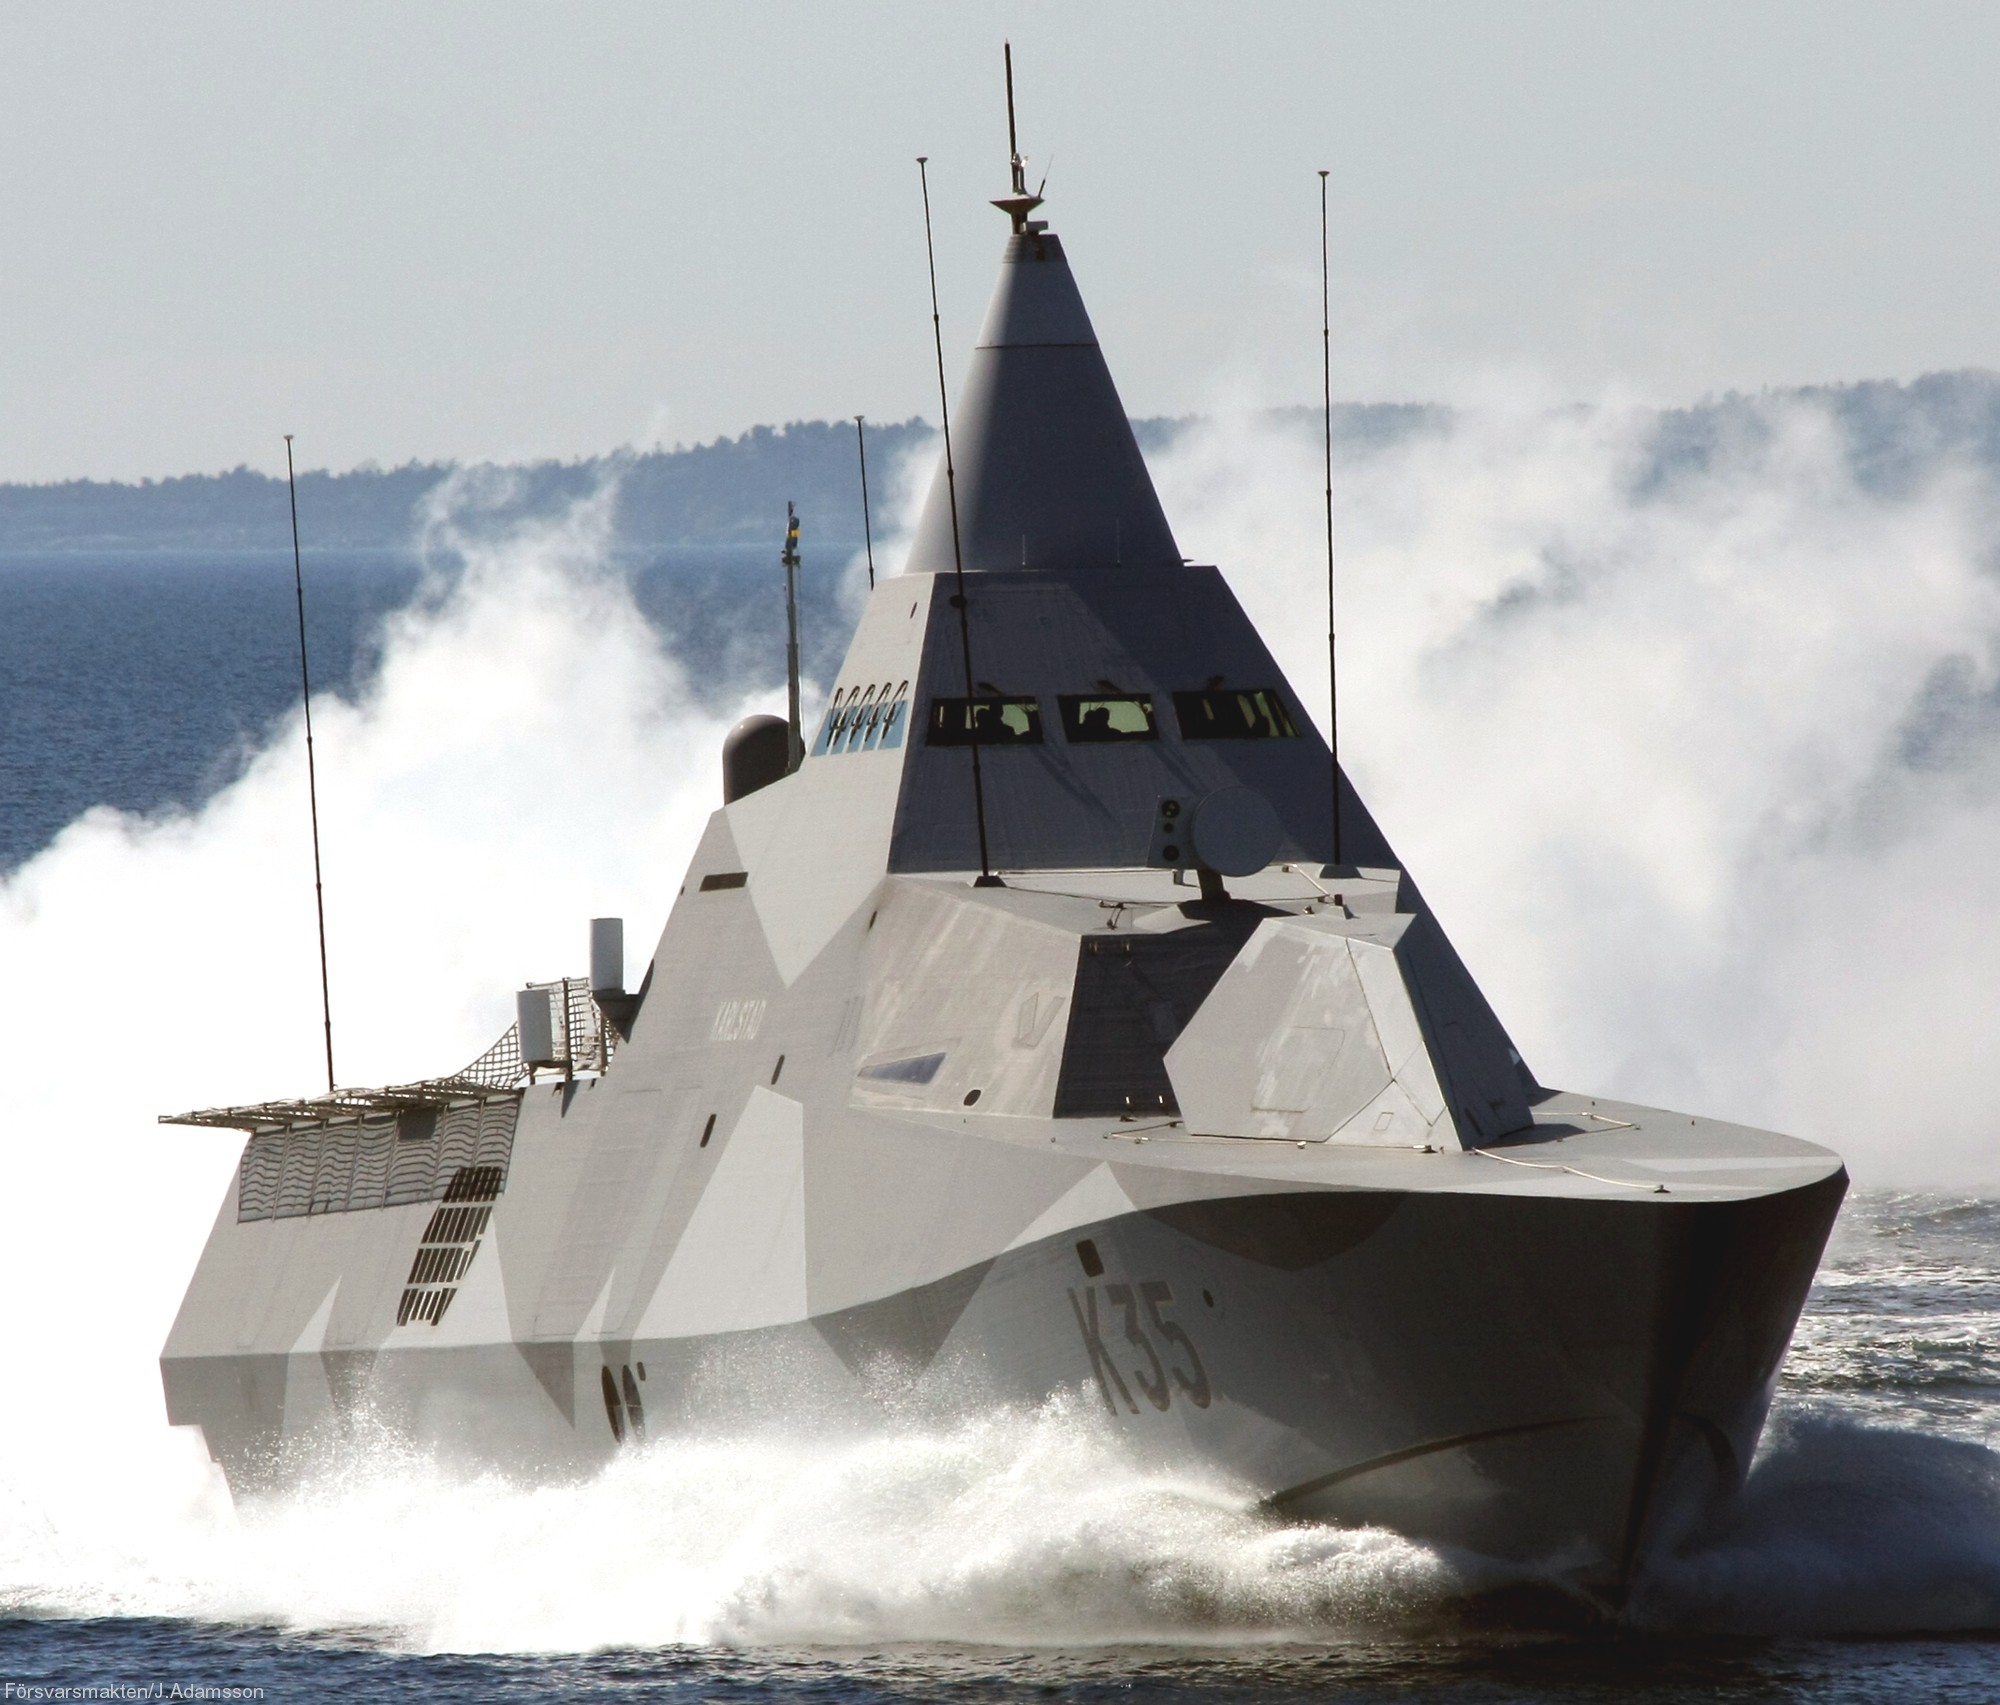 k35 hswms hms karlstad visby class corvette royal swedish navy svenska marinen 09